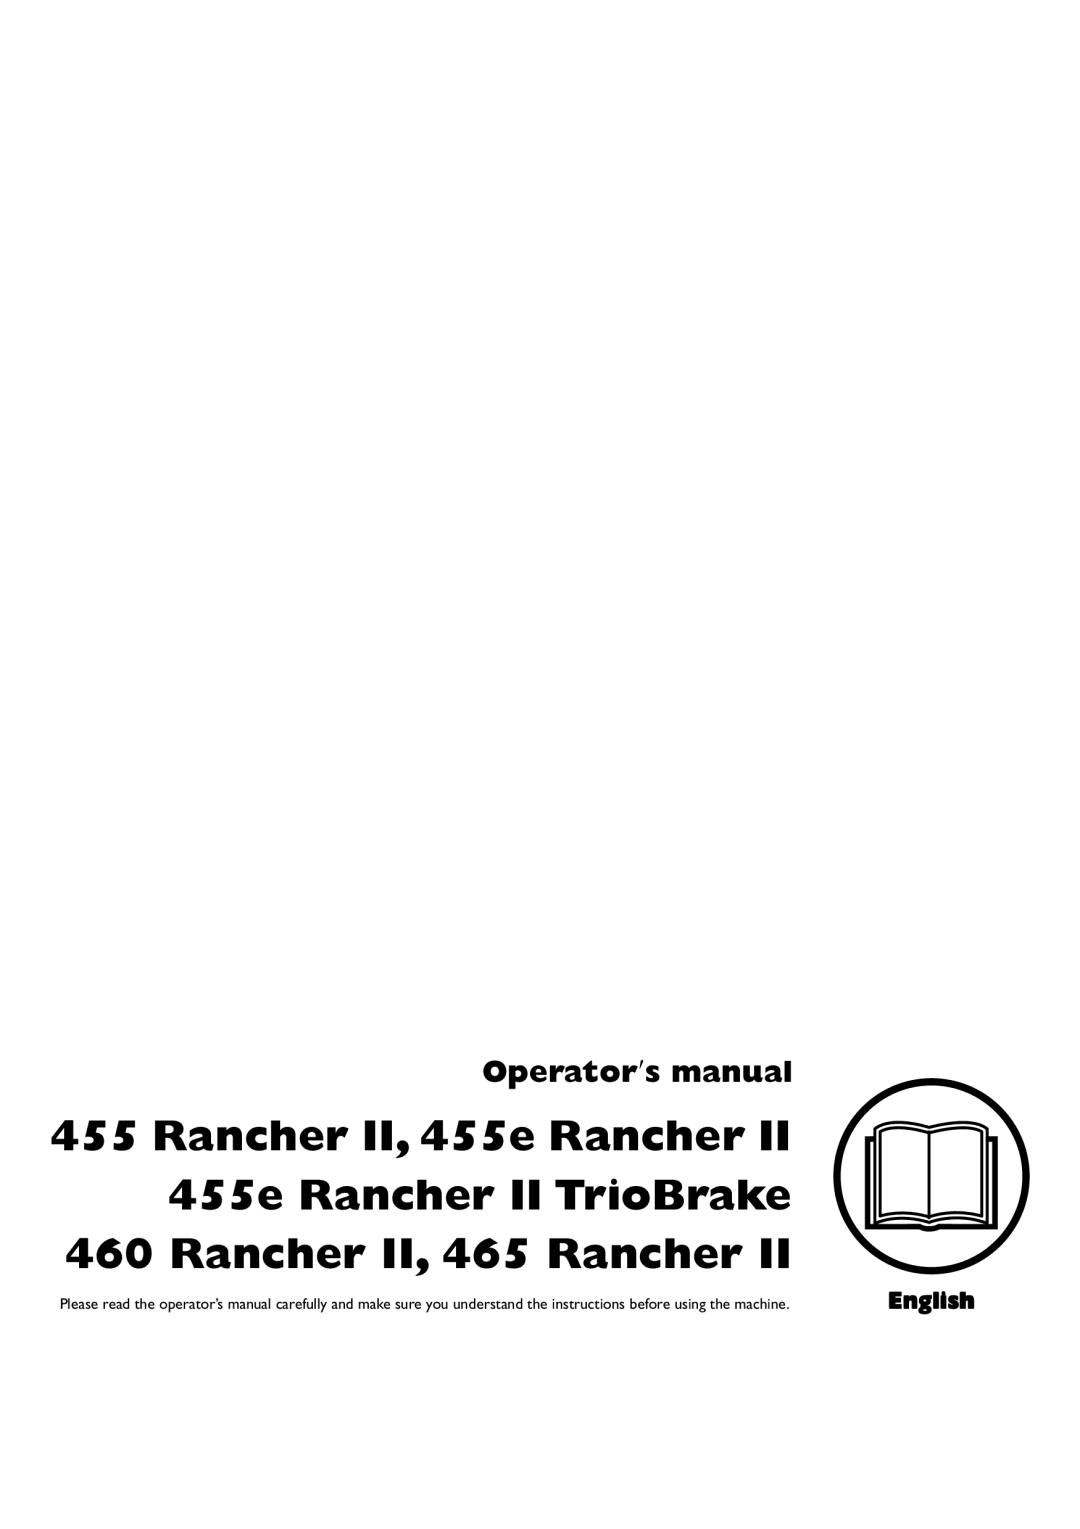 Husqvarna 460, 455e manual Rancher, Operator’s manual EPA, English 